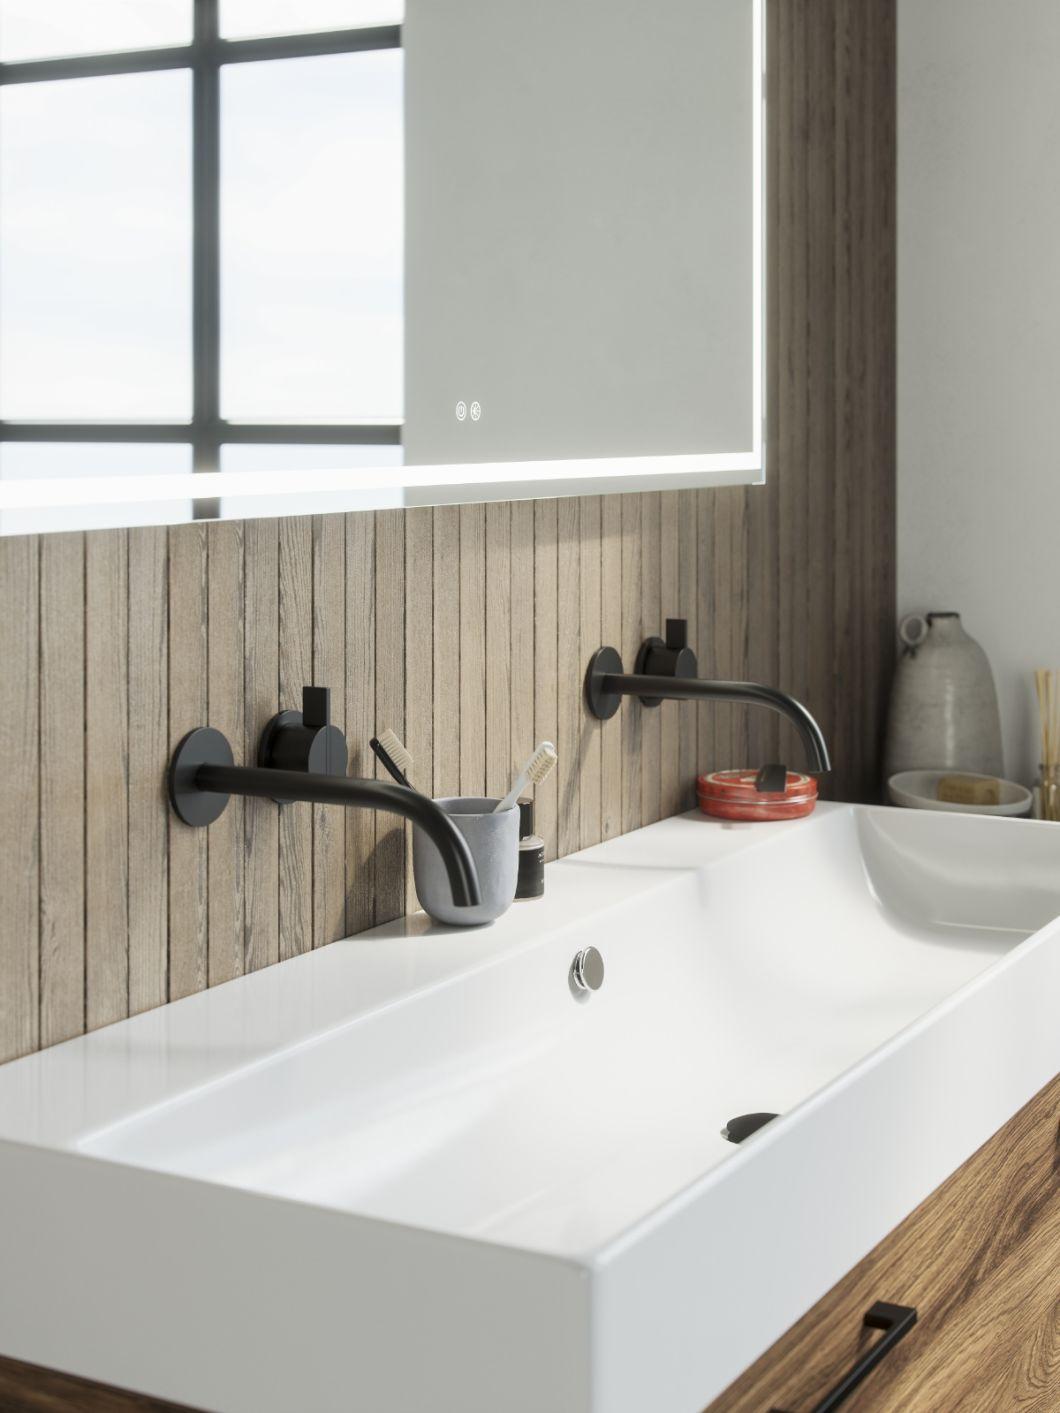 Manufacture European Style Bathroom Vanity Bathroom Cabinet with Ceramic Sink&LED Intelligent Mirror